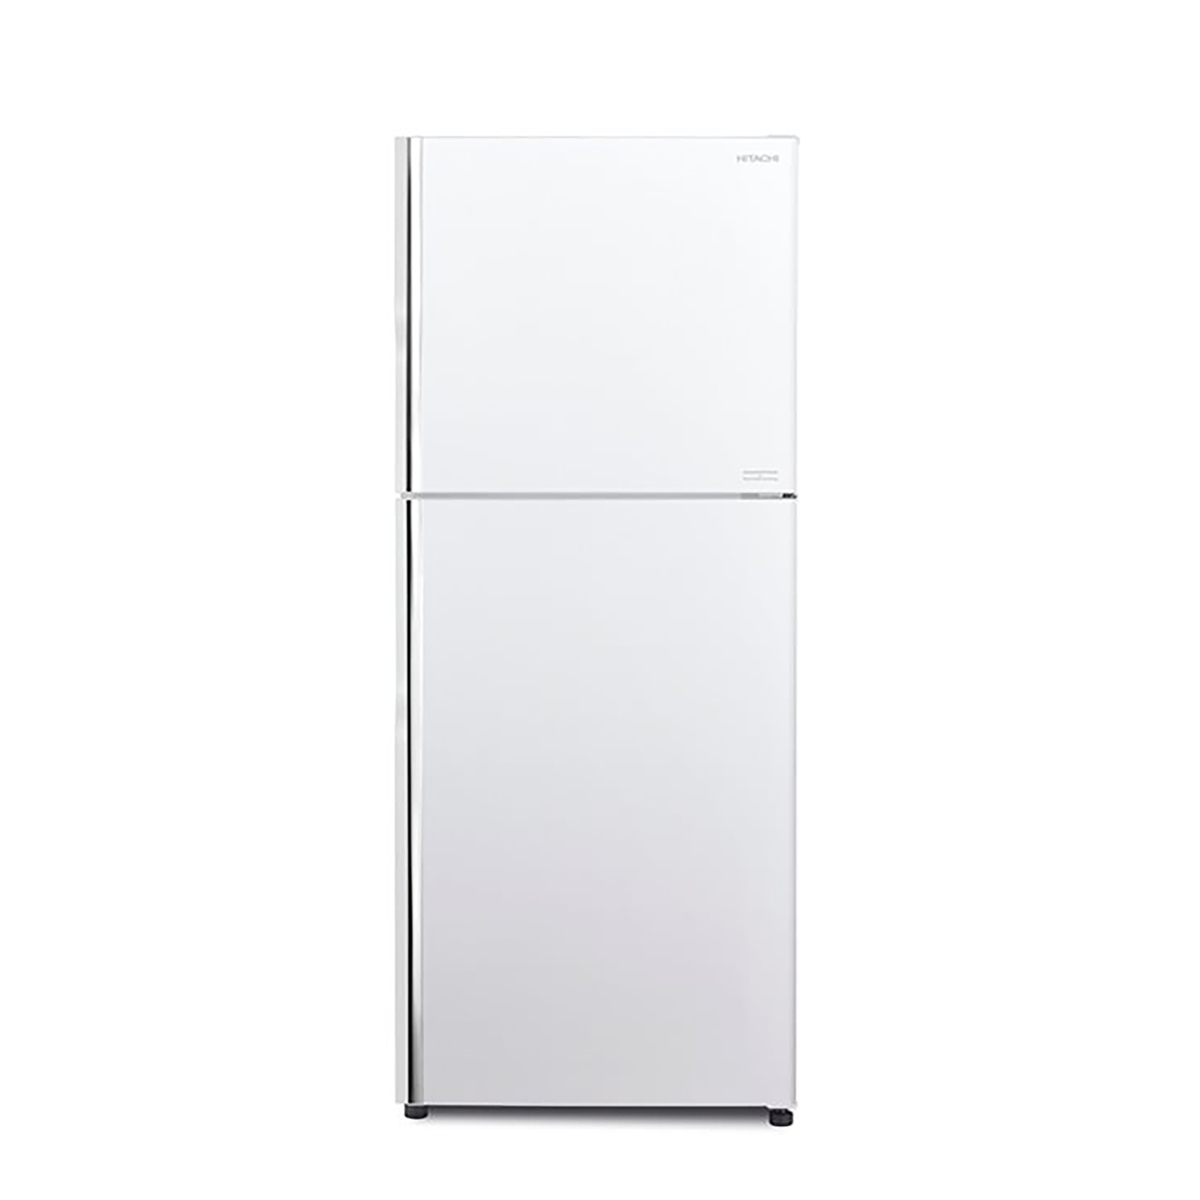 Hitachi Double Door Refrigerator RVX500PK9K PWH 500Ltr